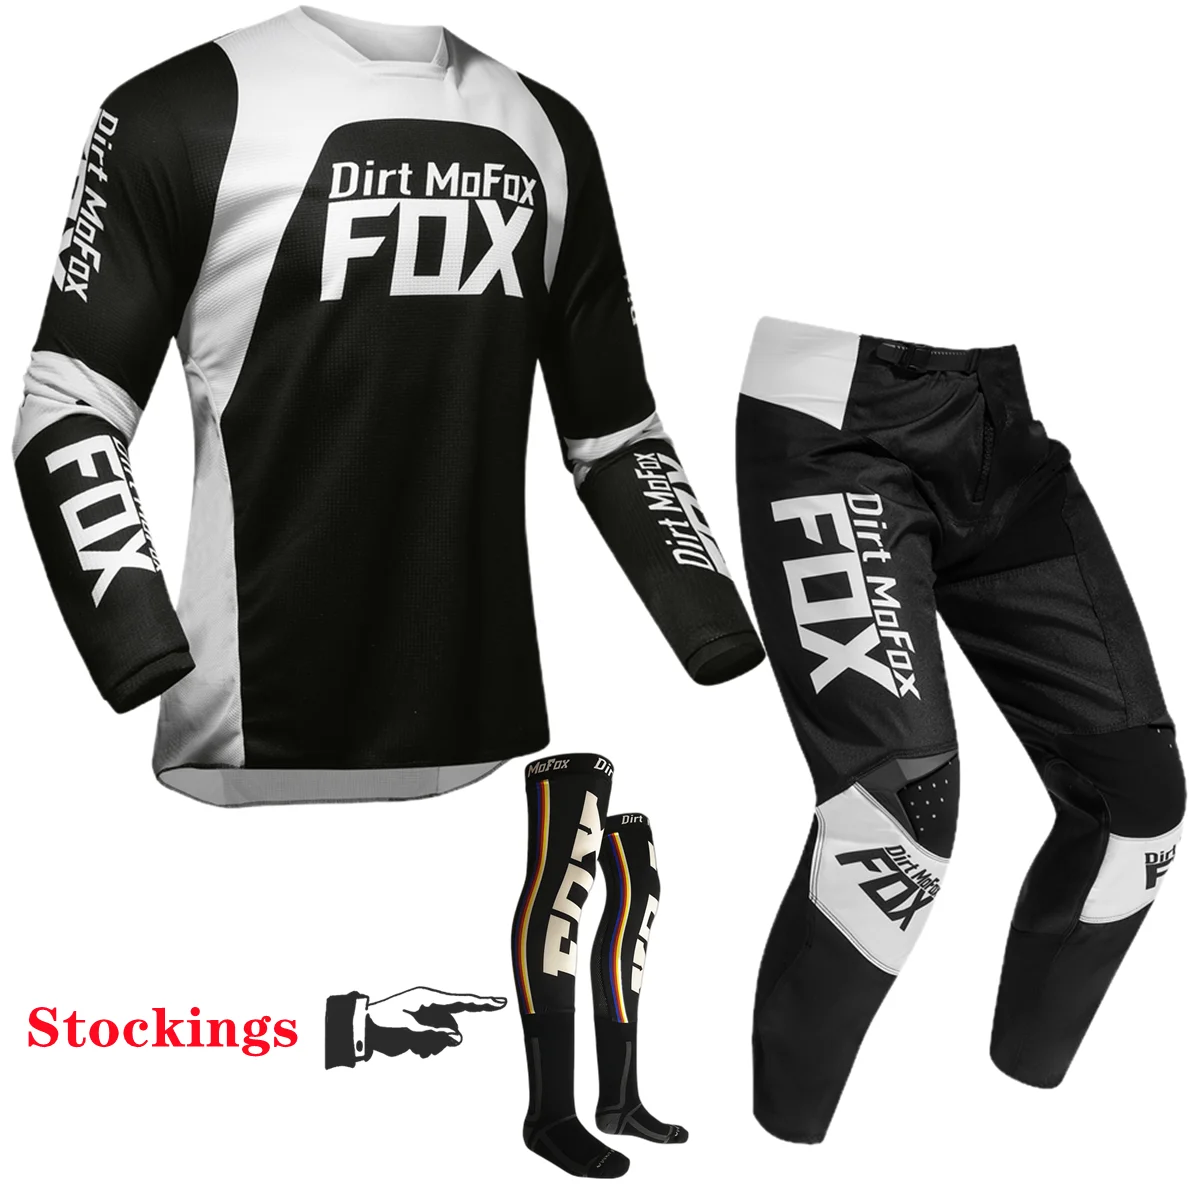 2022 NEW Dirt MoFox Moto Gear Set Jersey Pant MX Combo Motocross Racing Outfit Dirt Bike Suit Off Road Socks CombinationKit enlarge